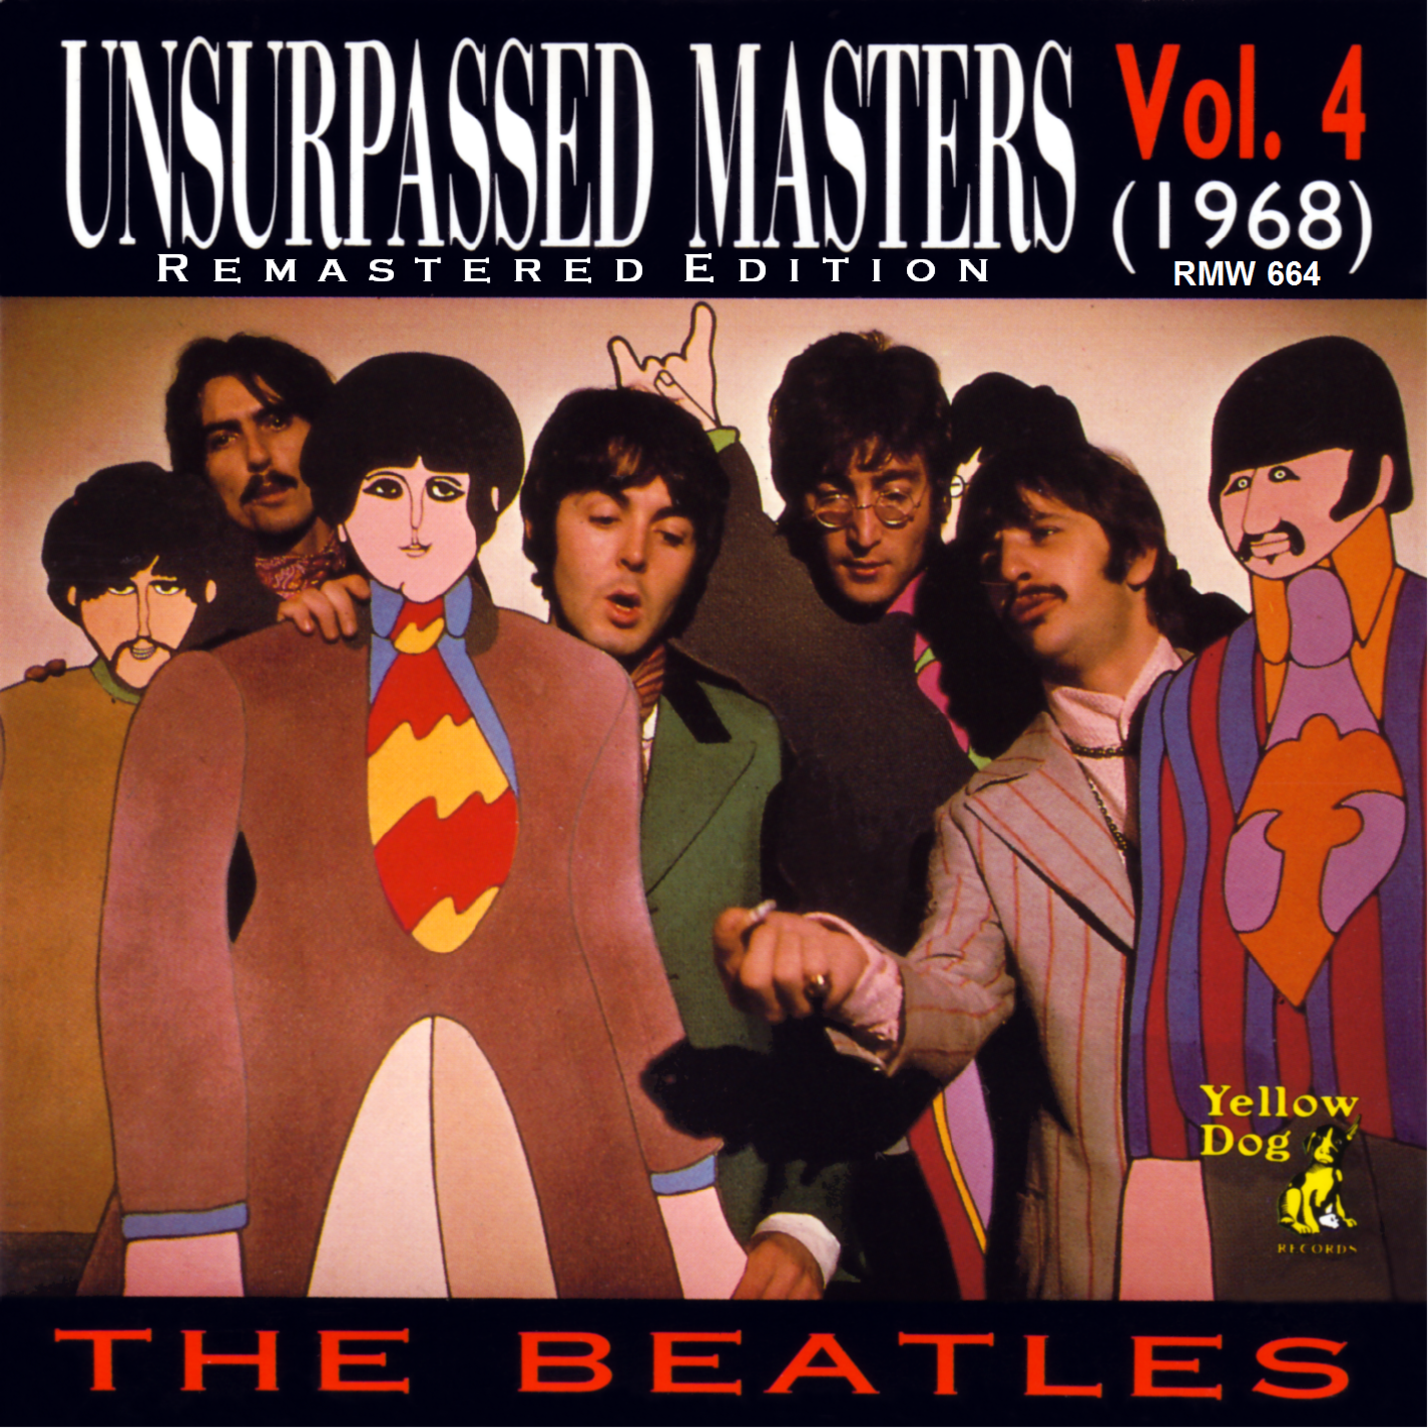 Beatles196xUnsurpassedMastersVol4 (2).png